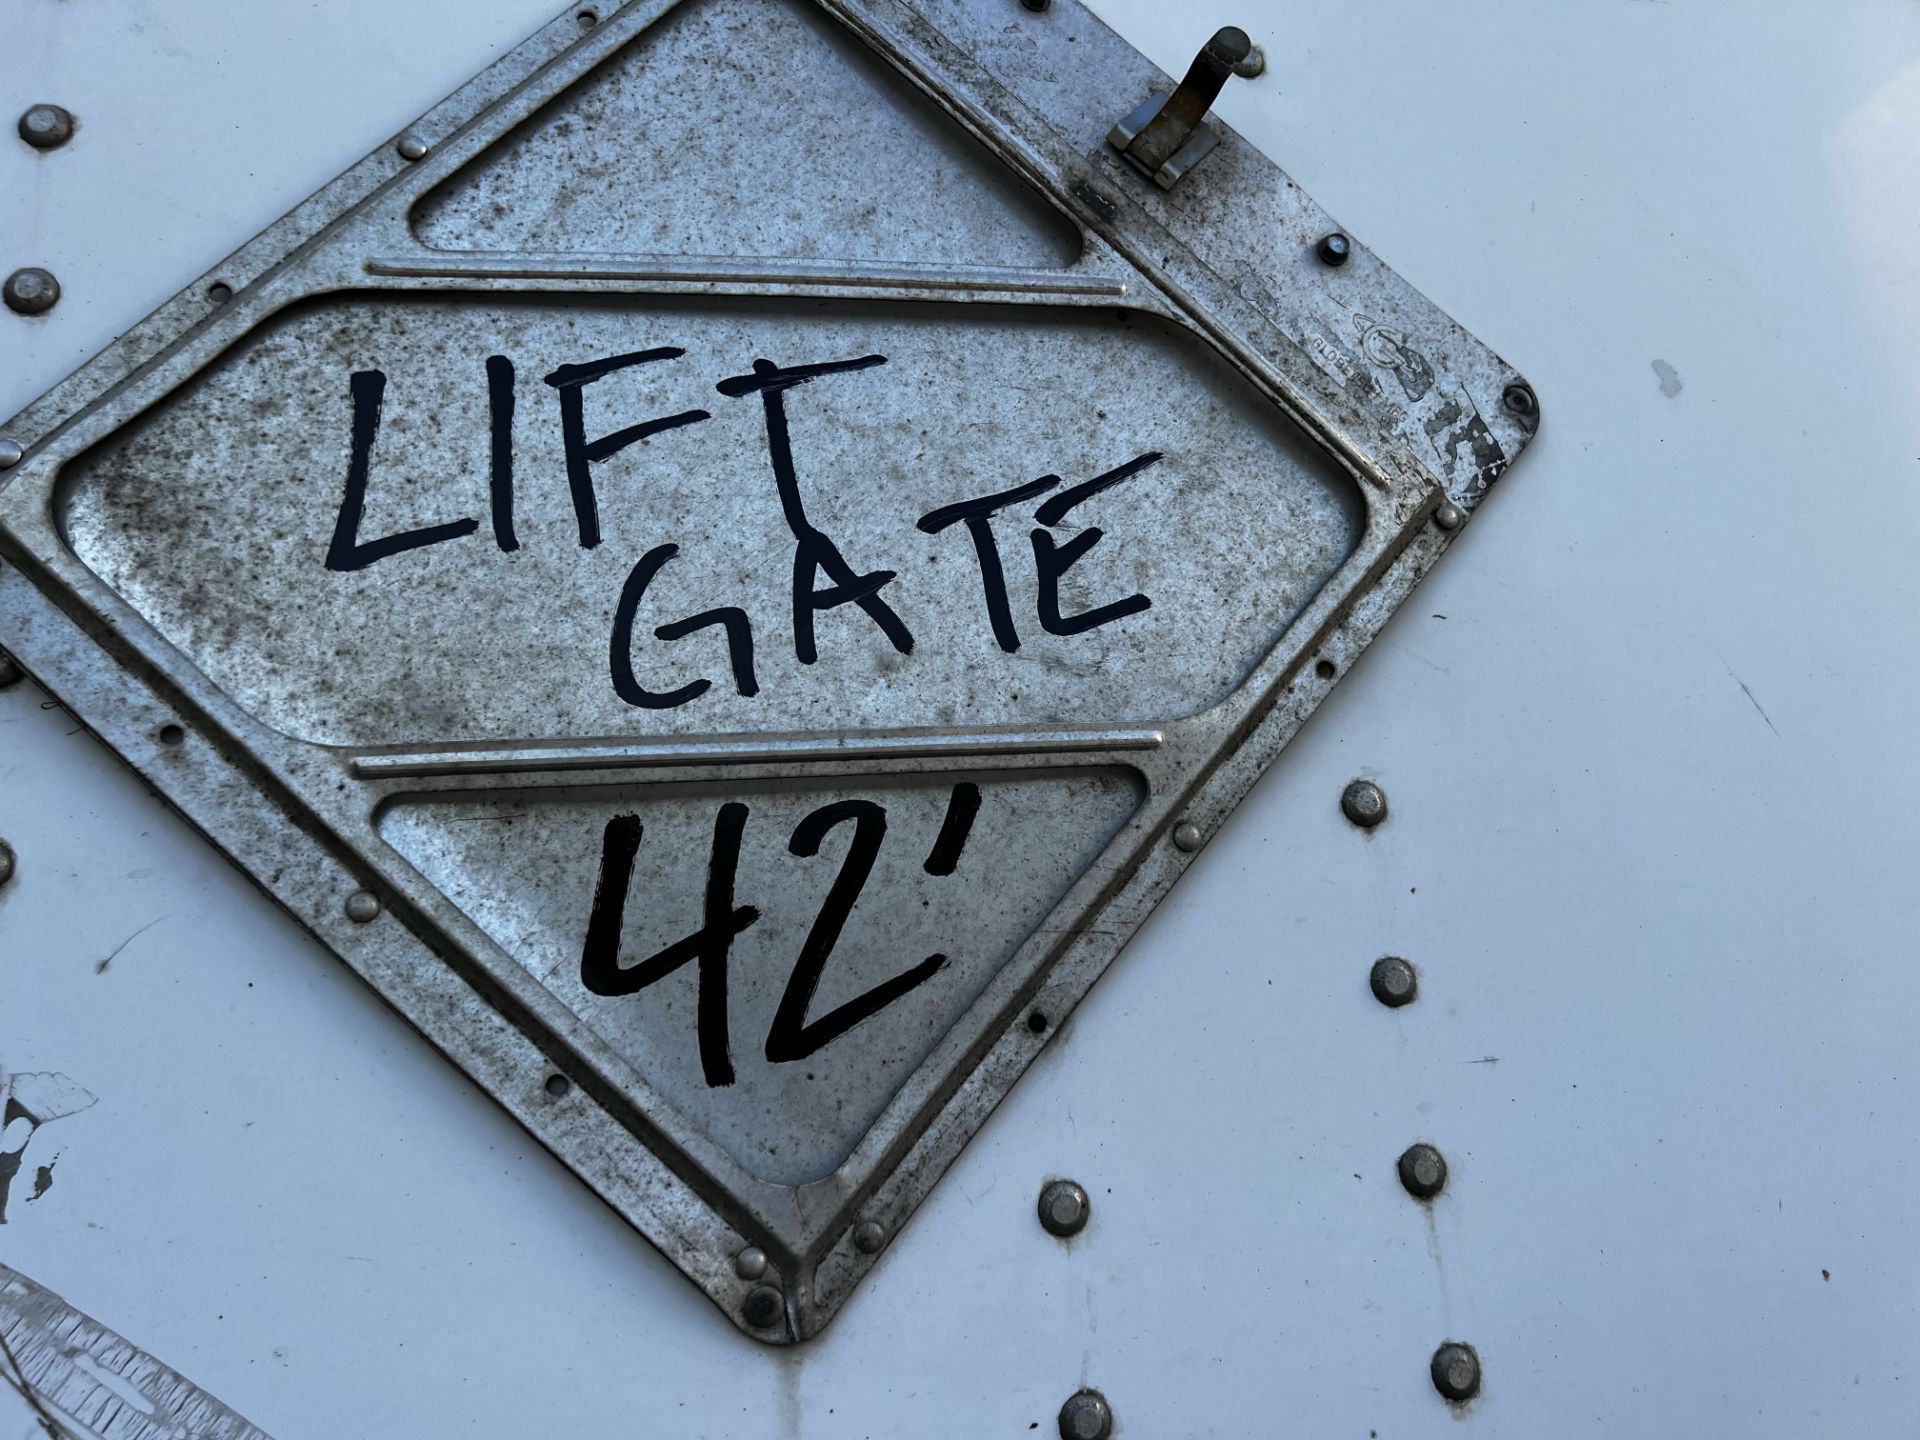 2013 Wabash 42' Liftgate Trailer, Sliding Rear Axle, Roll Up Door, 12'9" HT, (Unit 42102) - Image 8 of 9